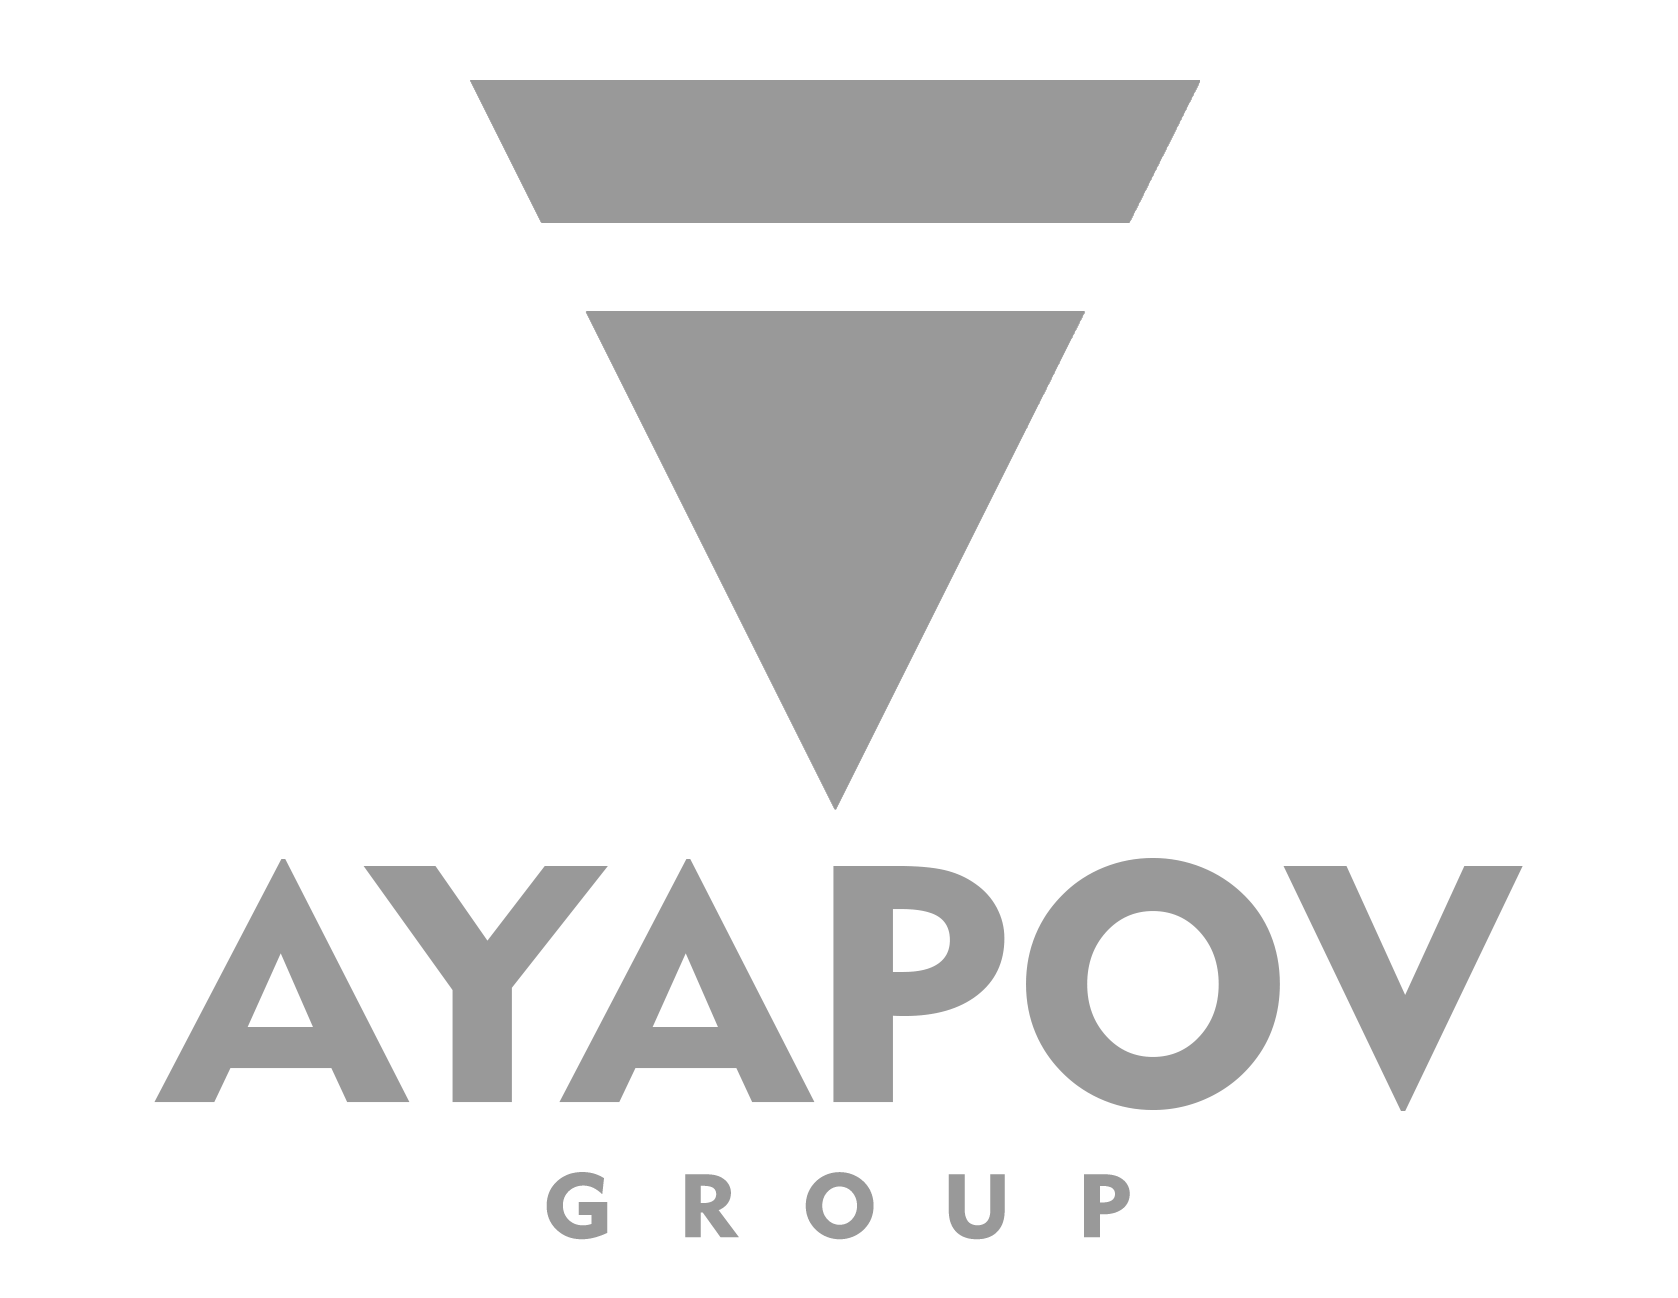 AYAPOV GROUP